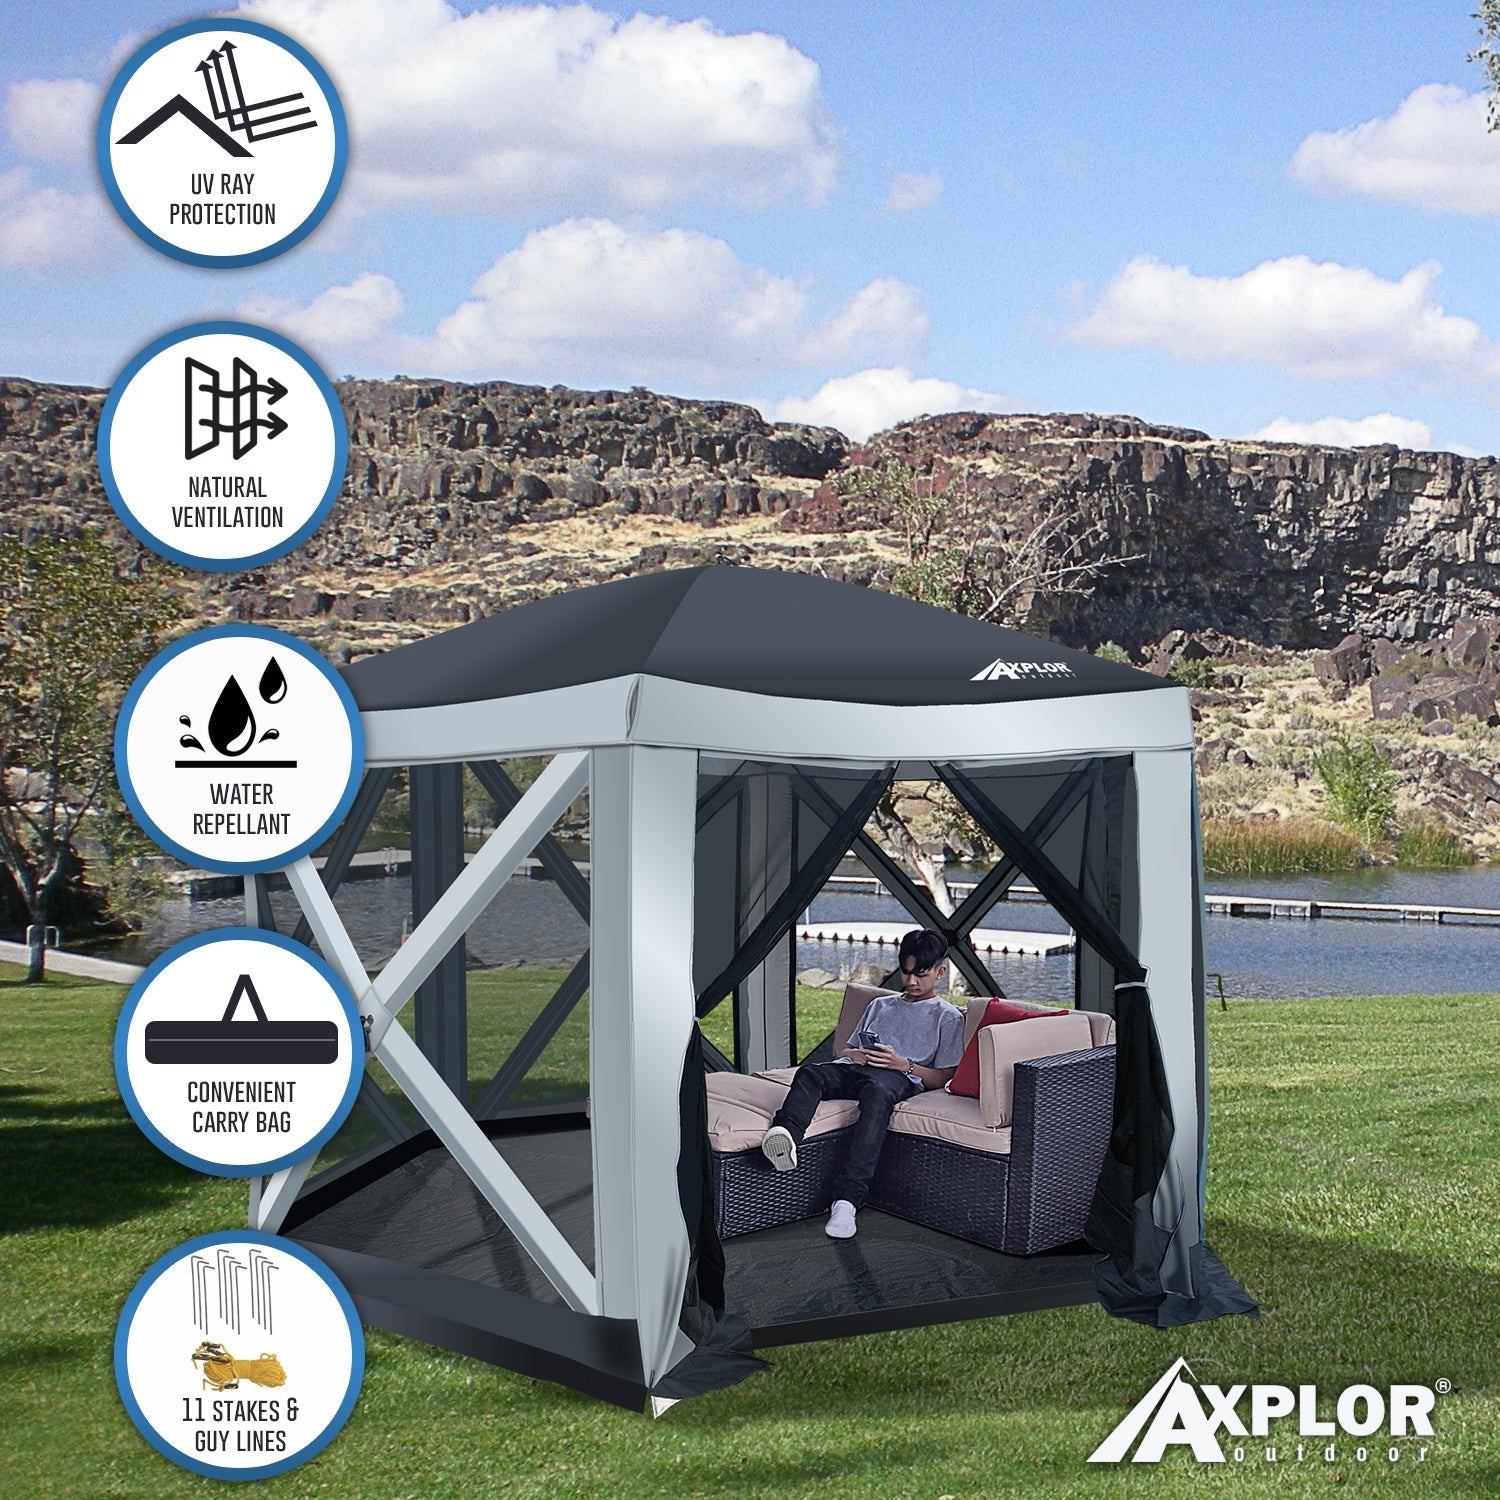 AxplorOutdoor SUMMERLIN Rapid Tent 11.8ft x11.8ft Hexagon Standing Height Portable Pop-Up Canopy with ATTACHABLE BATHTUB STYLE WATERPROOF FLOOR (8-10 Adults) - Open Box